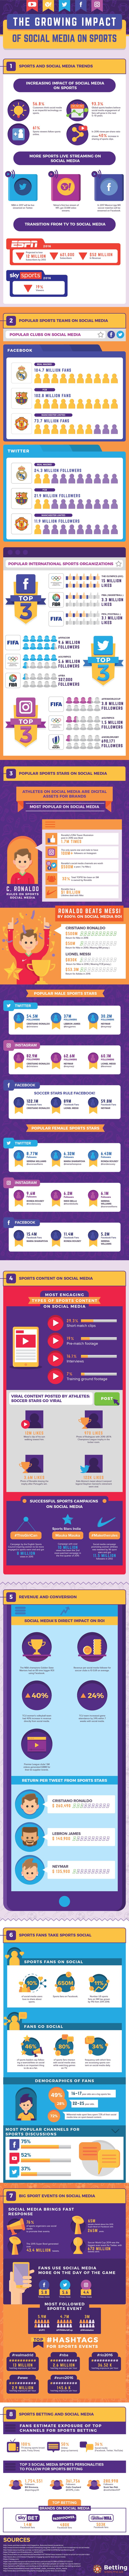 Infographic-increasing-sport-socialmedia.png